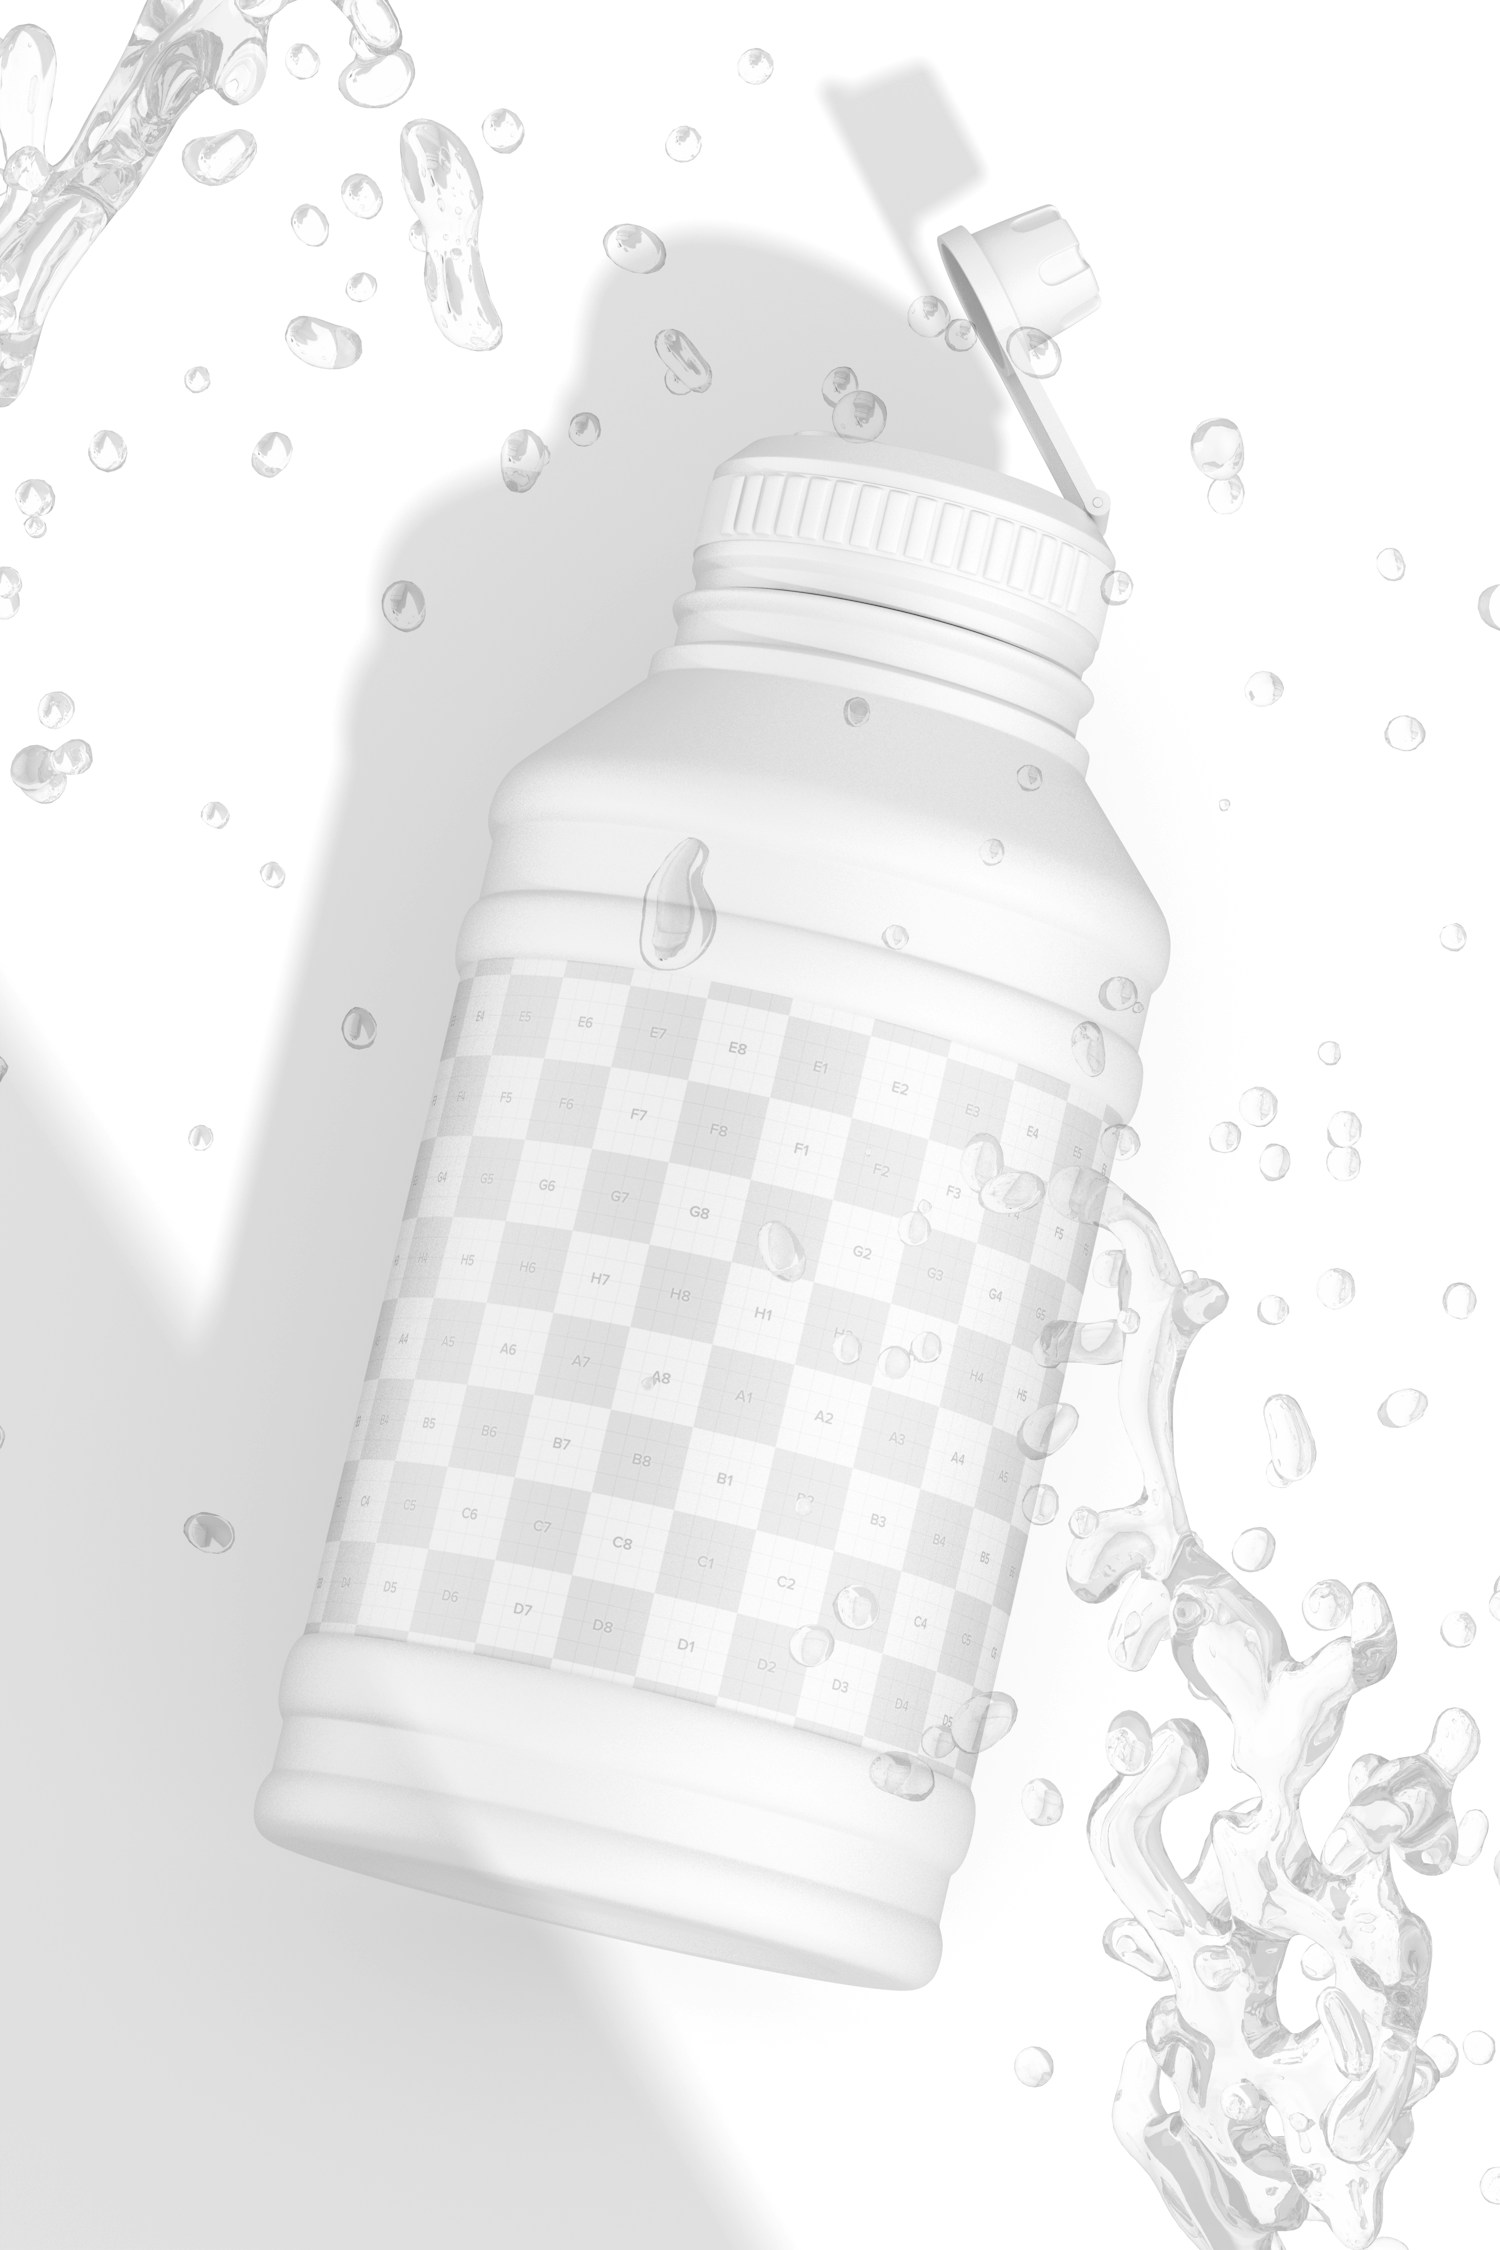 Plastic Water Bottle Mockup, Top View